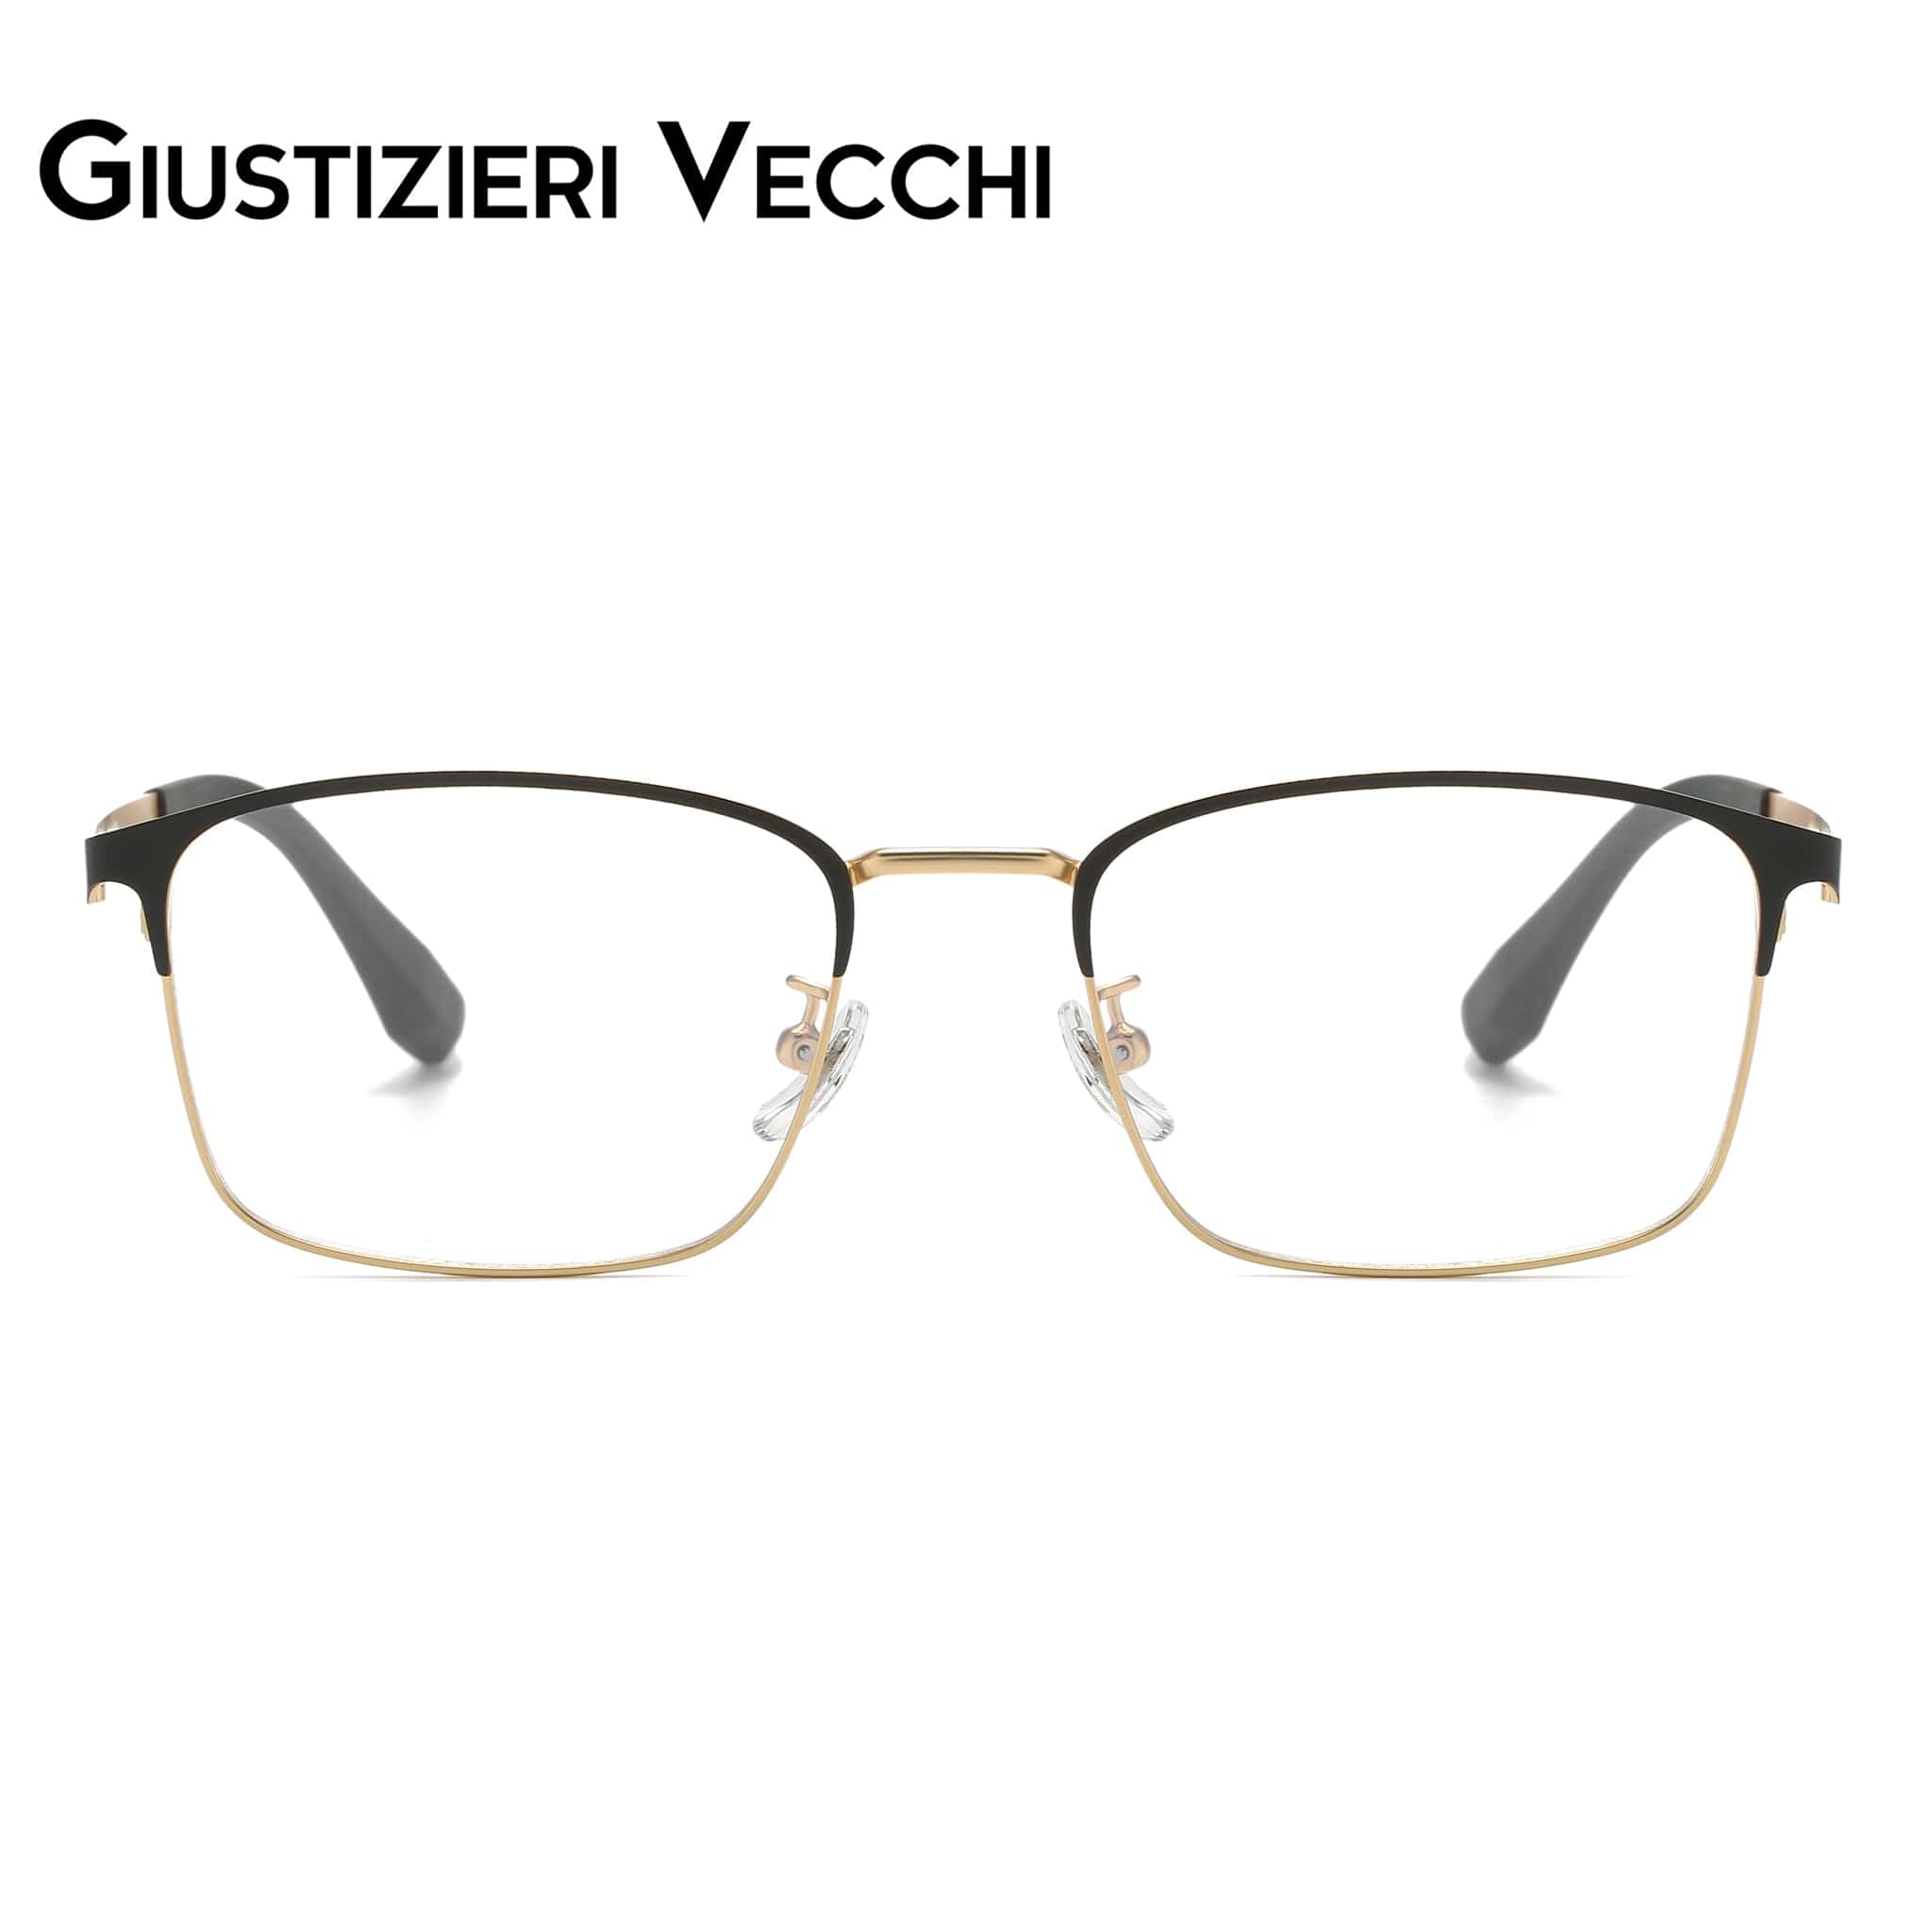 GIUSTIZIERI VECCHI Eyeglasses Medium / Black with Gold Firestorm Duo